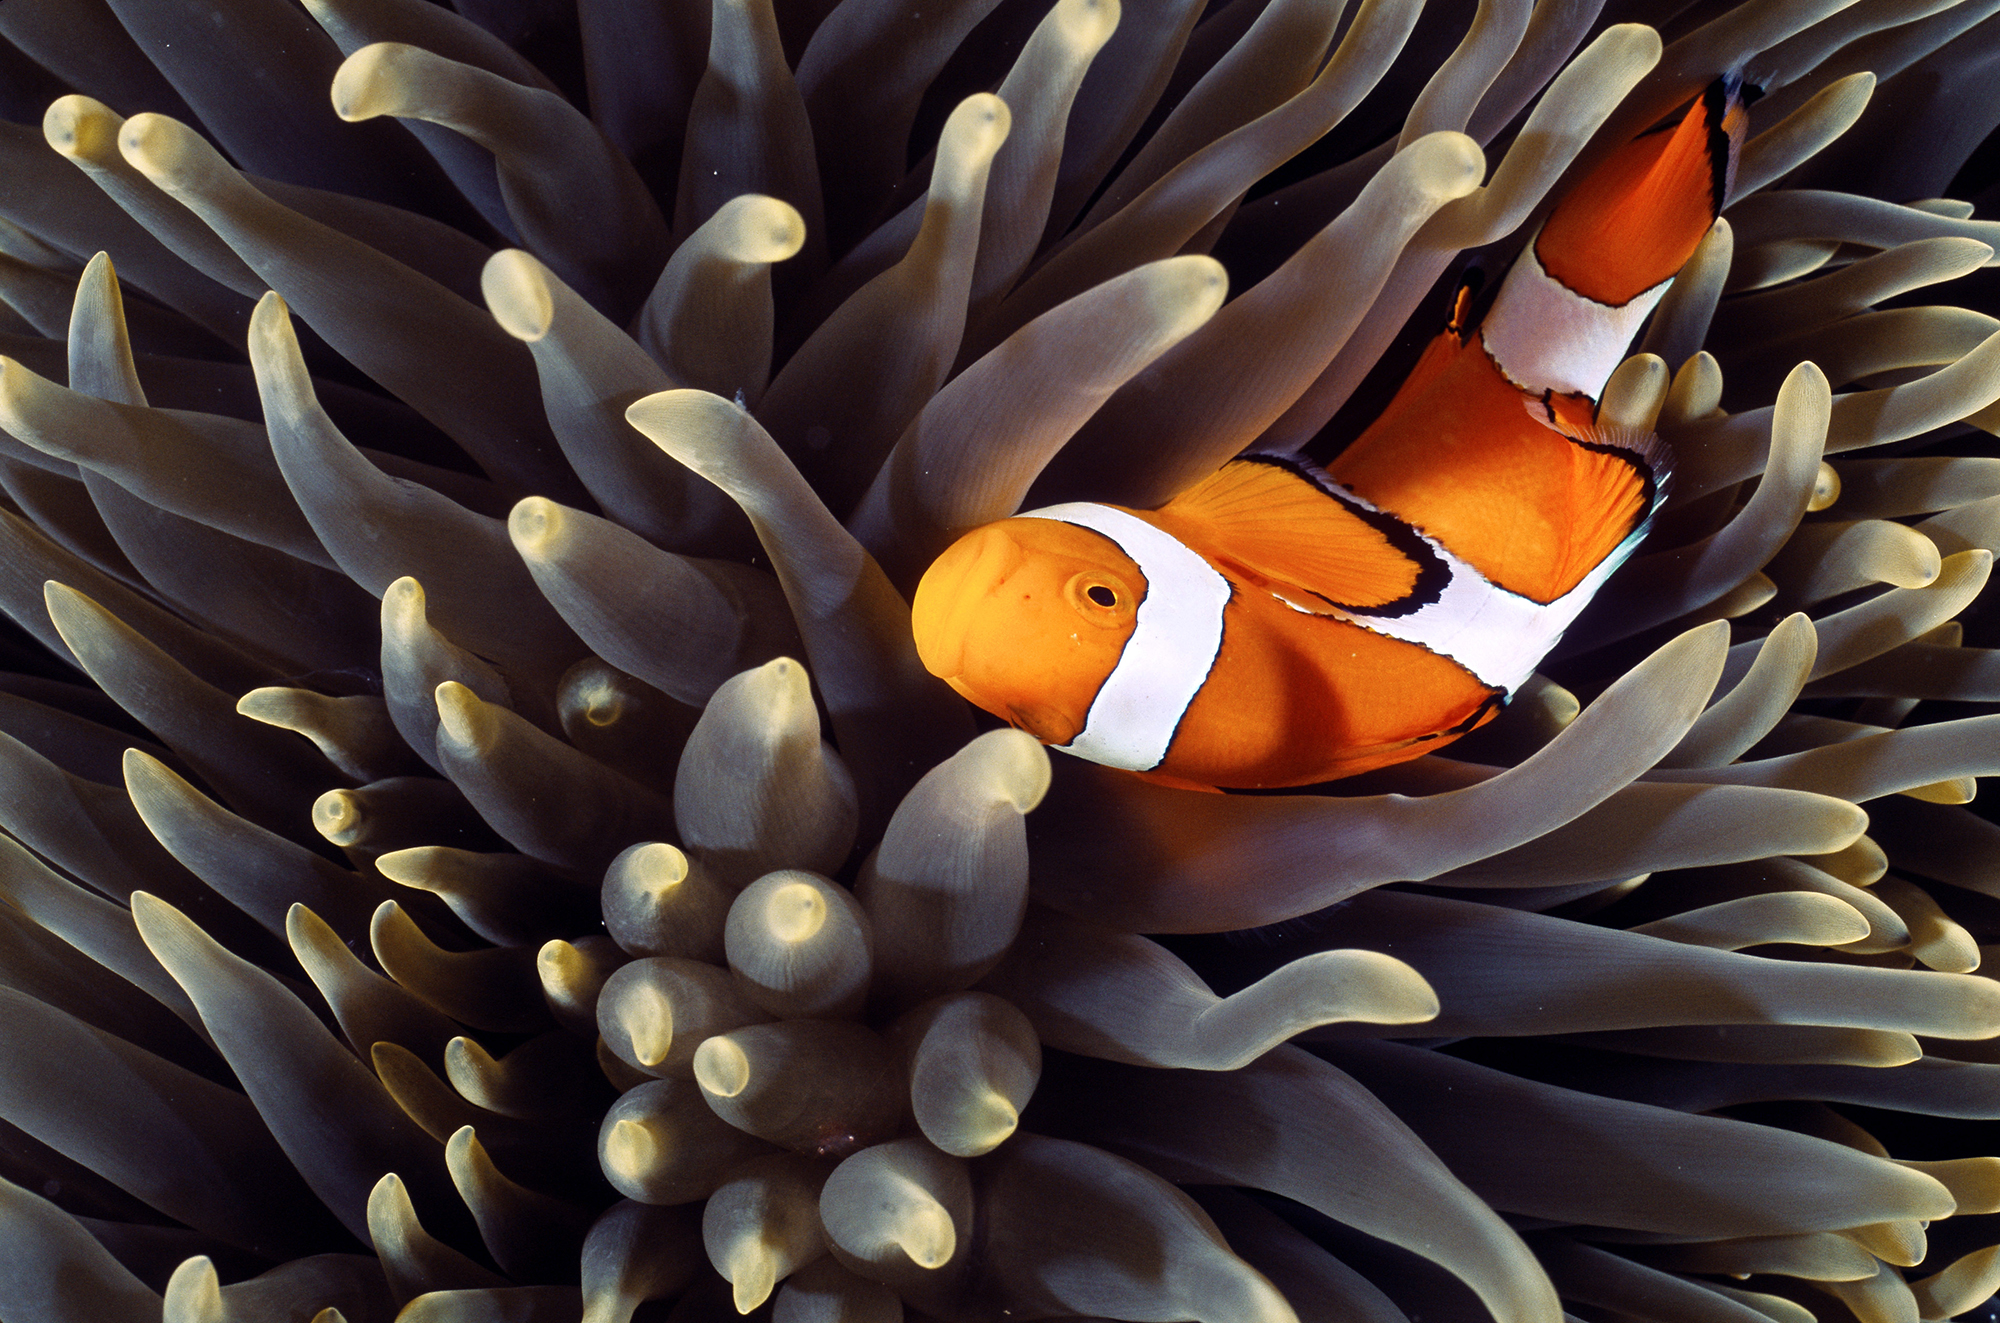 III. Benefits of the Clownfish-Anemone Mutualism